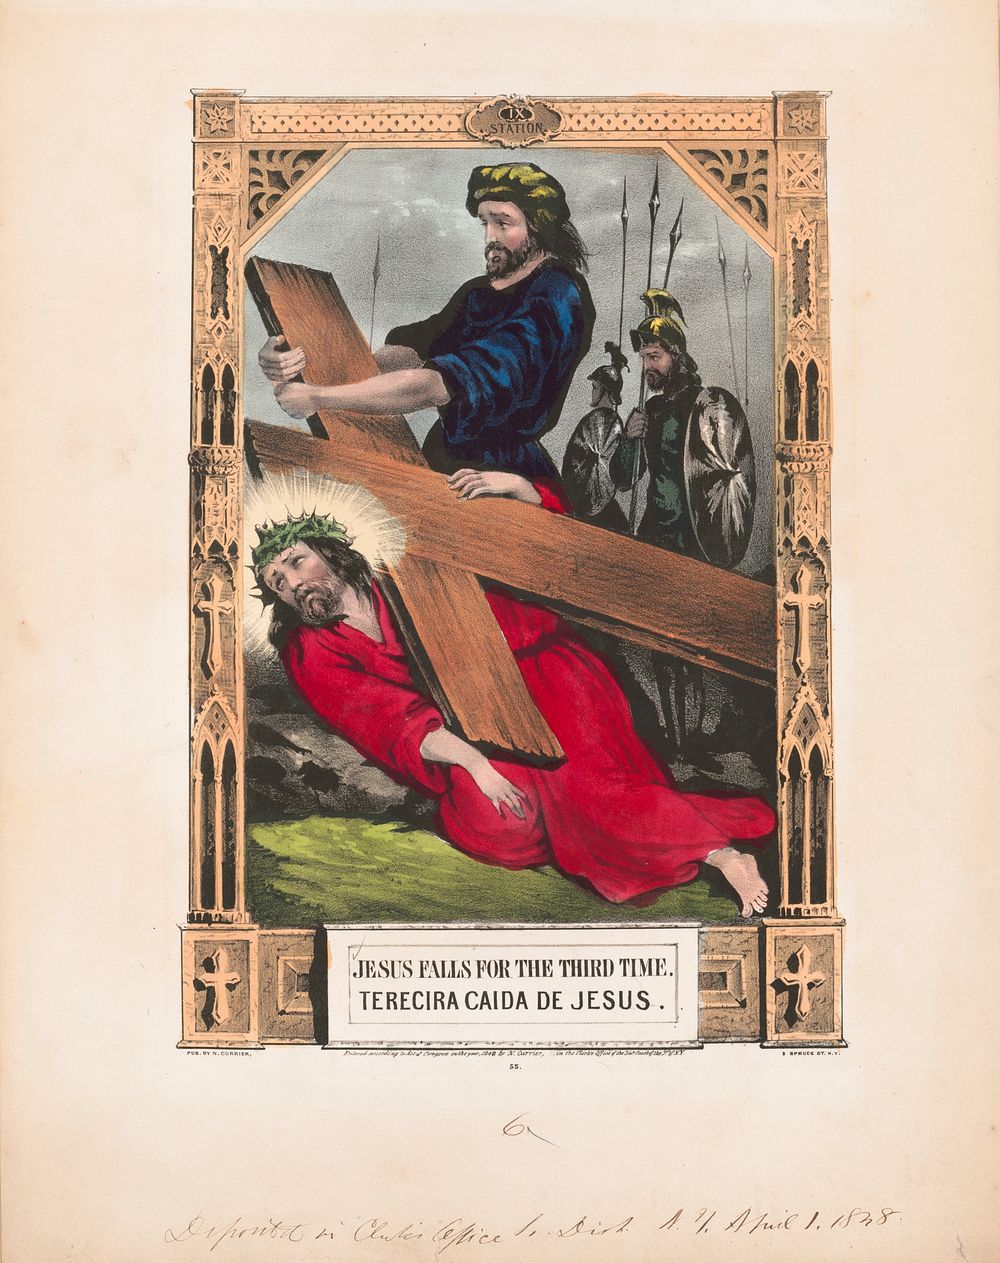 Jesus falls for the third time. / terecira caida de Jesus, N. Currier (Firm)